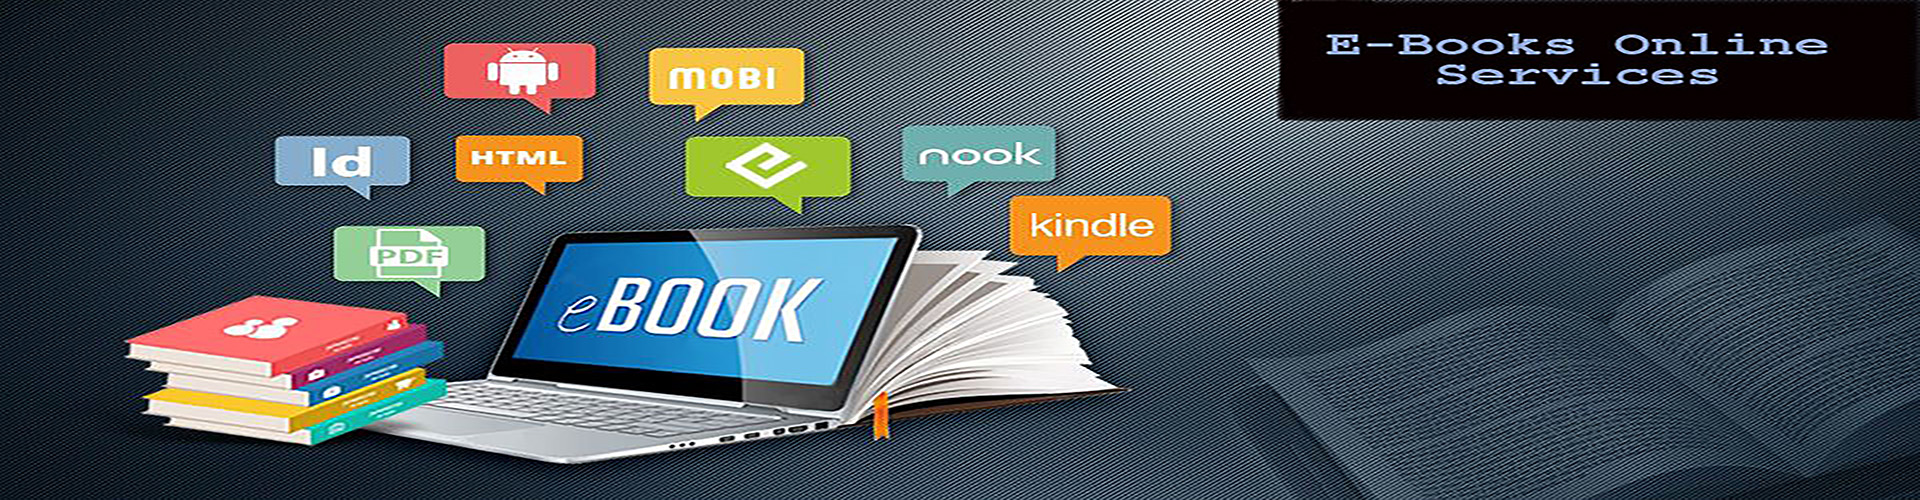 E-Book Services Image